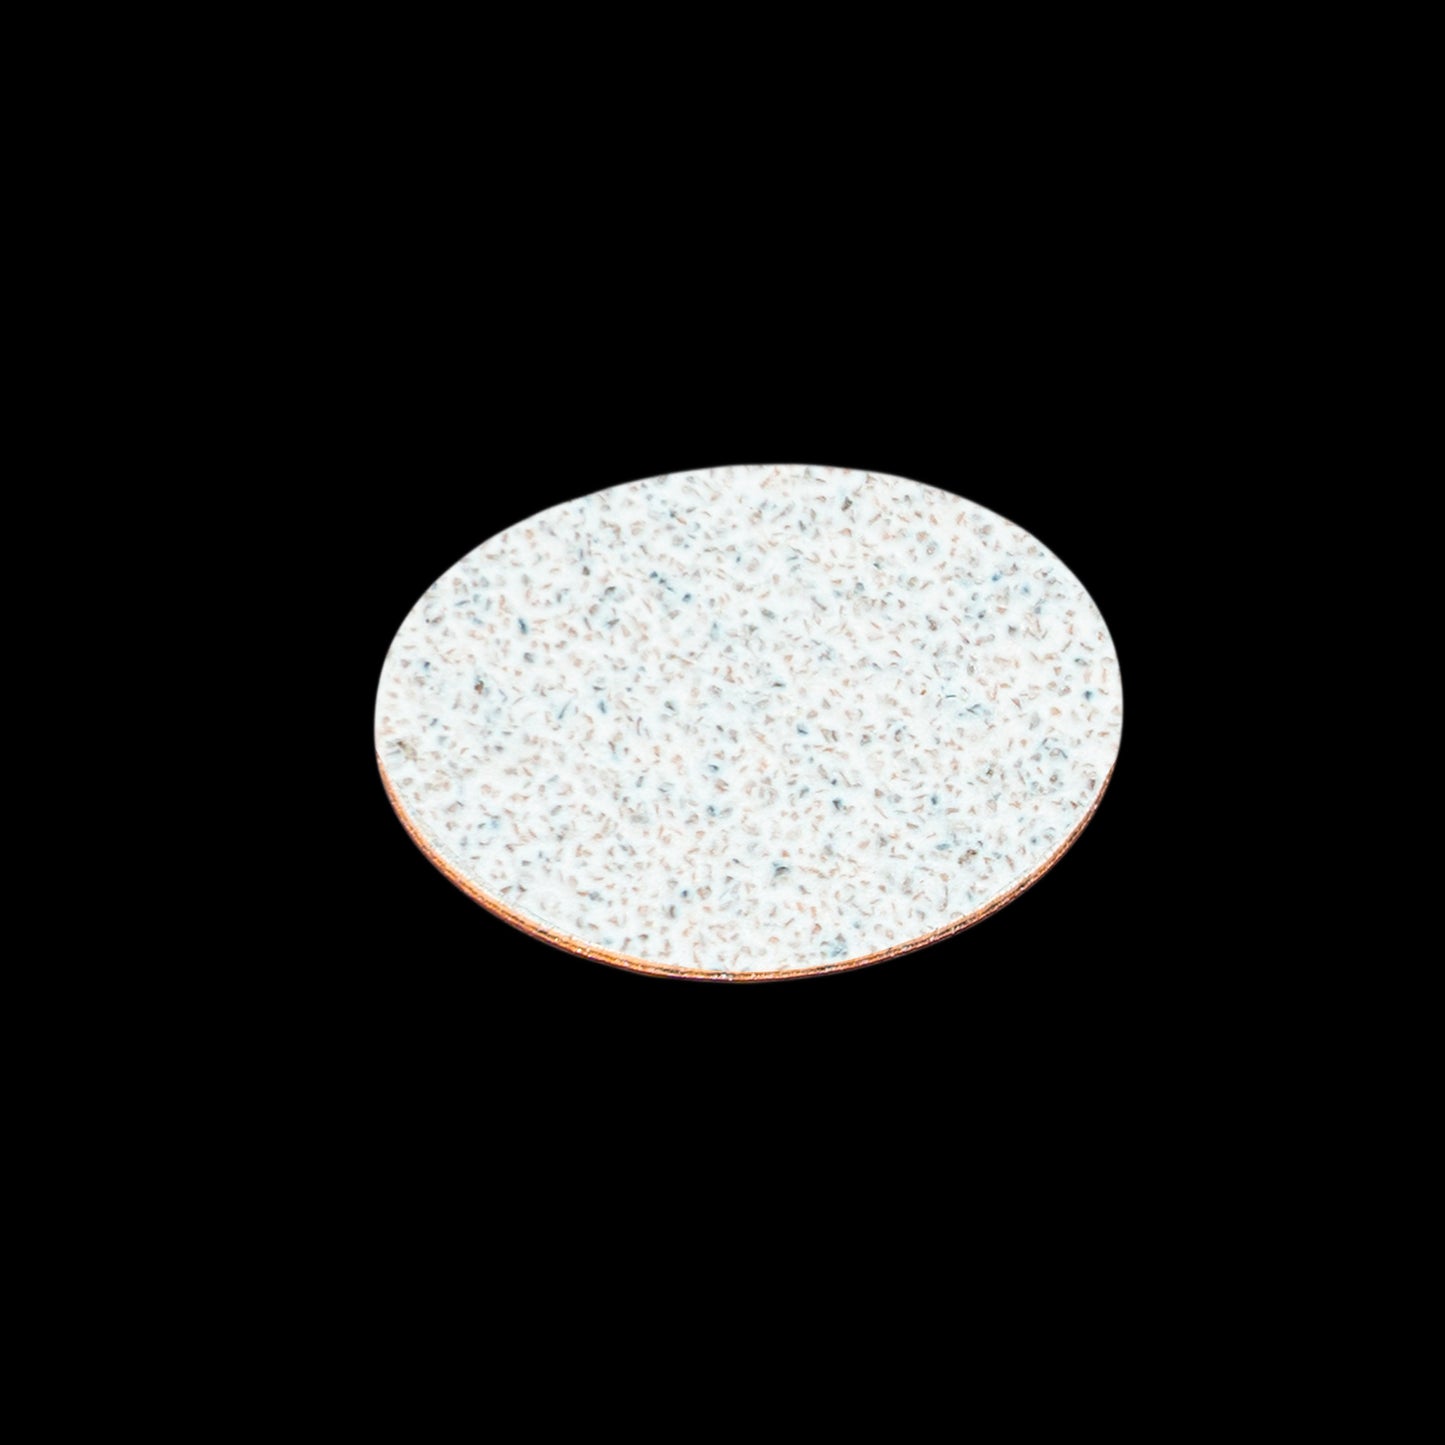 Staleks White refill pads for pedicure disc PODODISC STALEKS PRO L 80 grit (50 pc)